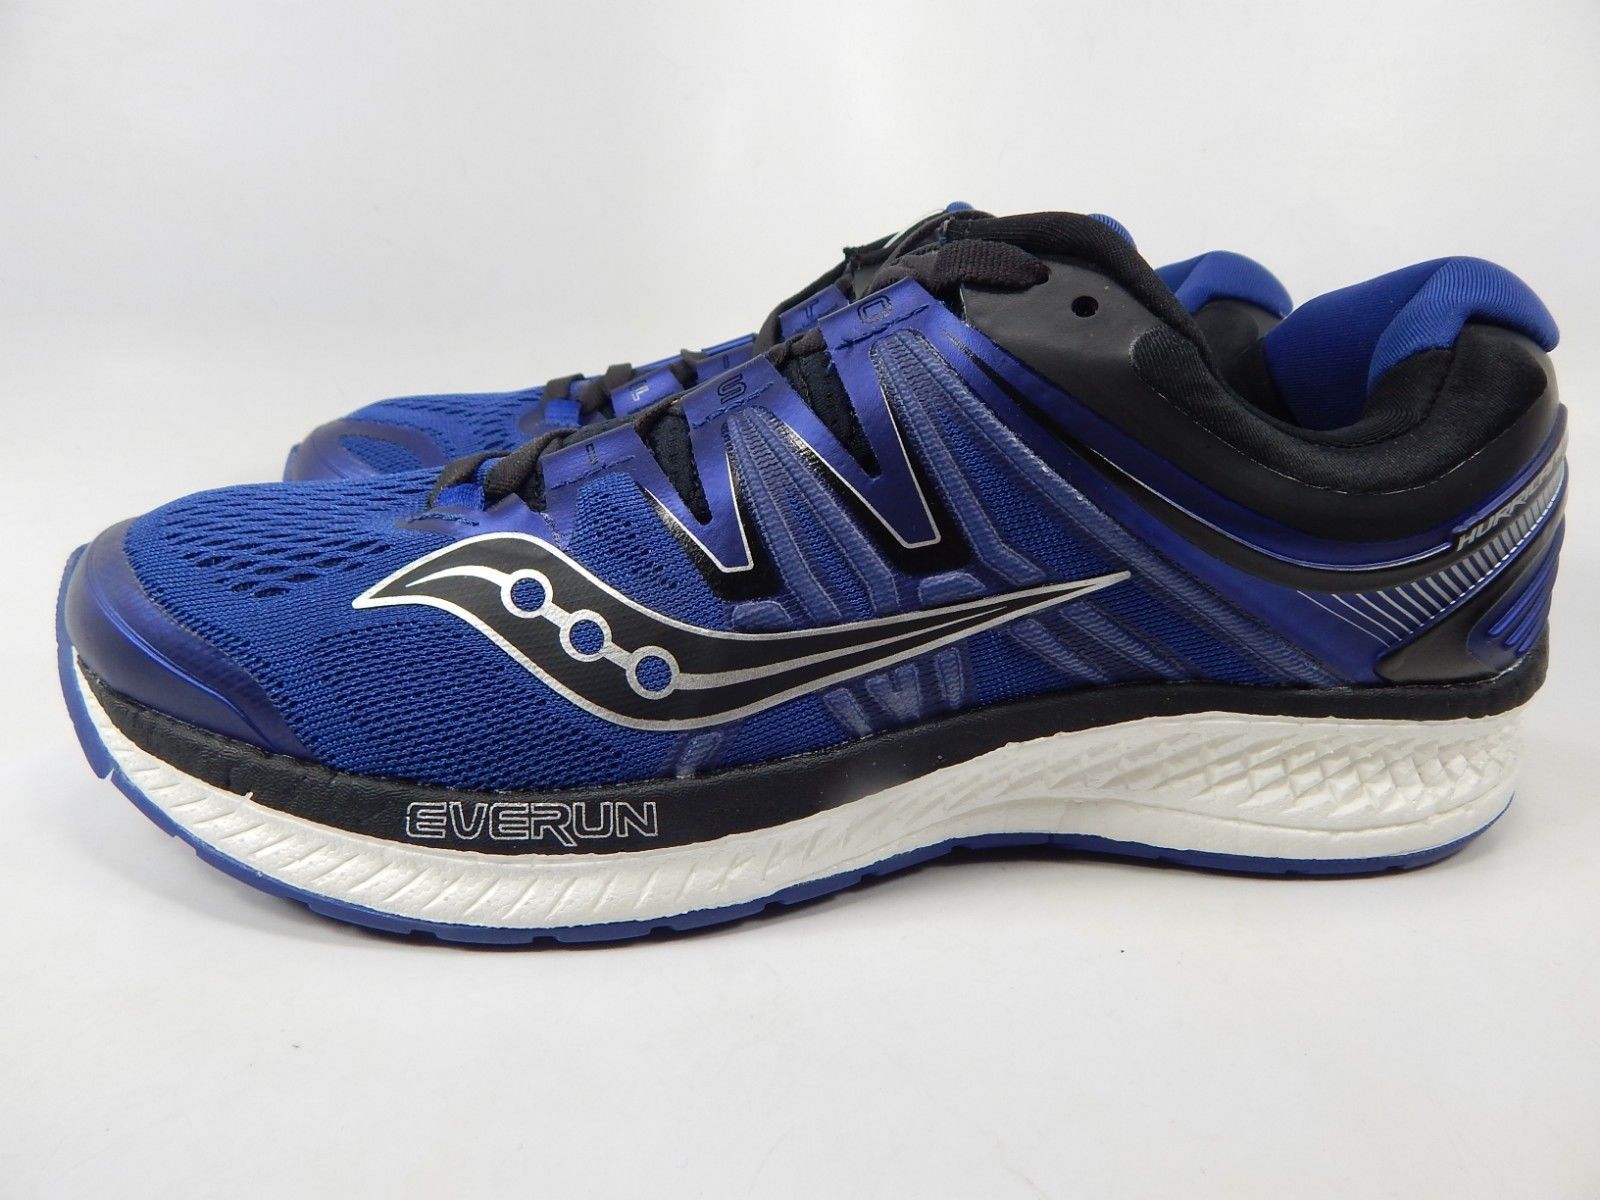 Saucony Hurricane ISO 4 Size 9 M (D) EU 42.5 Men's Running Shoes Blue ...